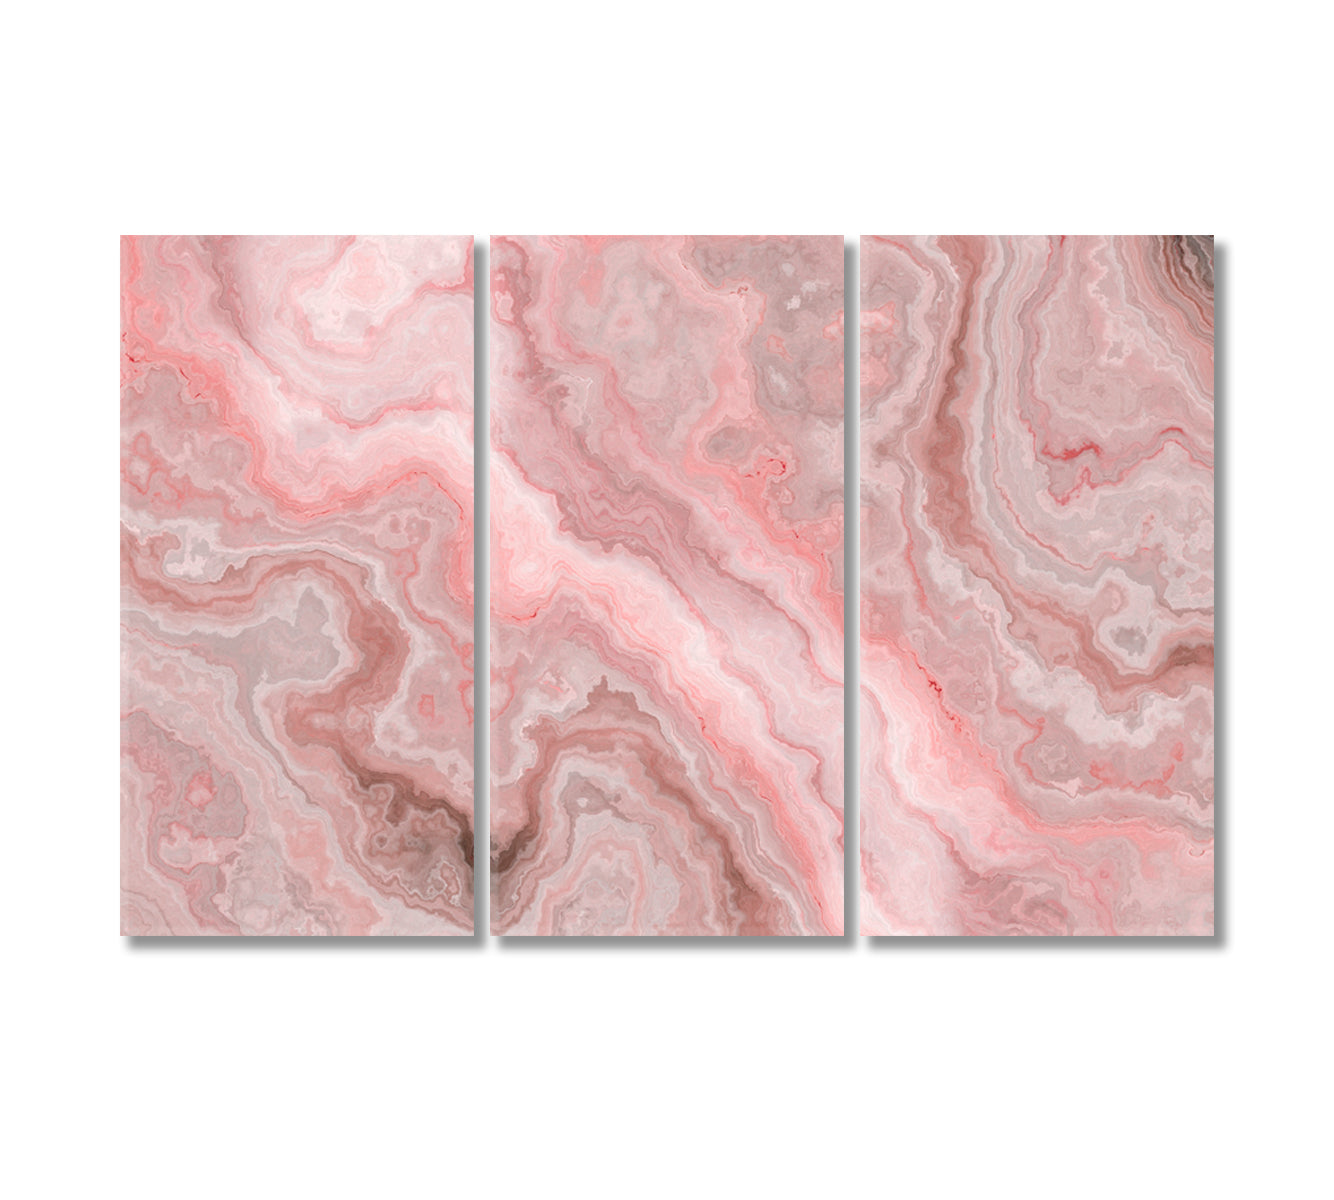 Abstract Pink Onyx Canvas Print-Artwork-CetArt-3 Panels-36x24 inches-CetArt